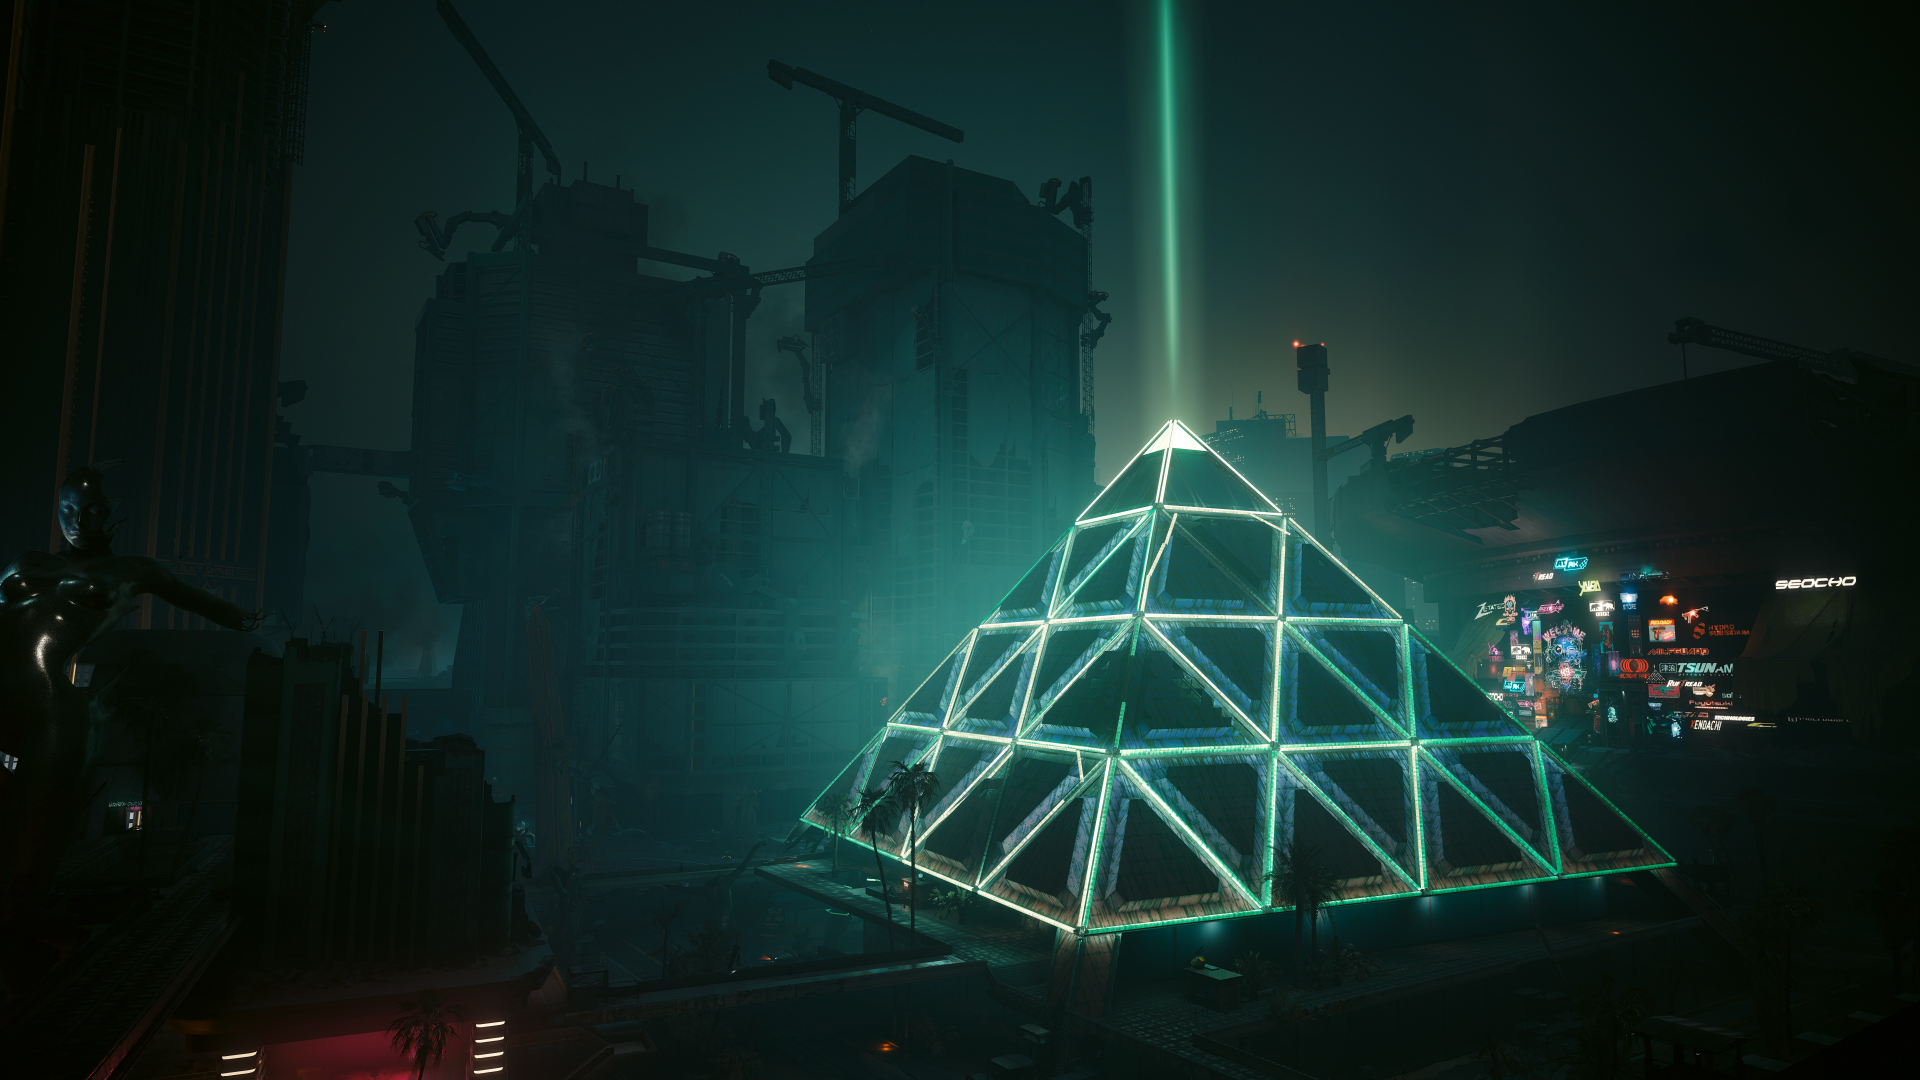 Cyberpunk 2077 Pyramid Blade Runner Artwork Glass Design Illustration Video Game Art Screen Shot Vid 1920x1080